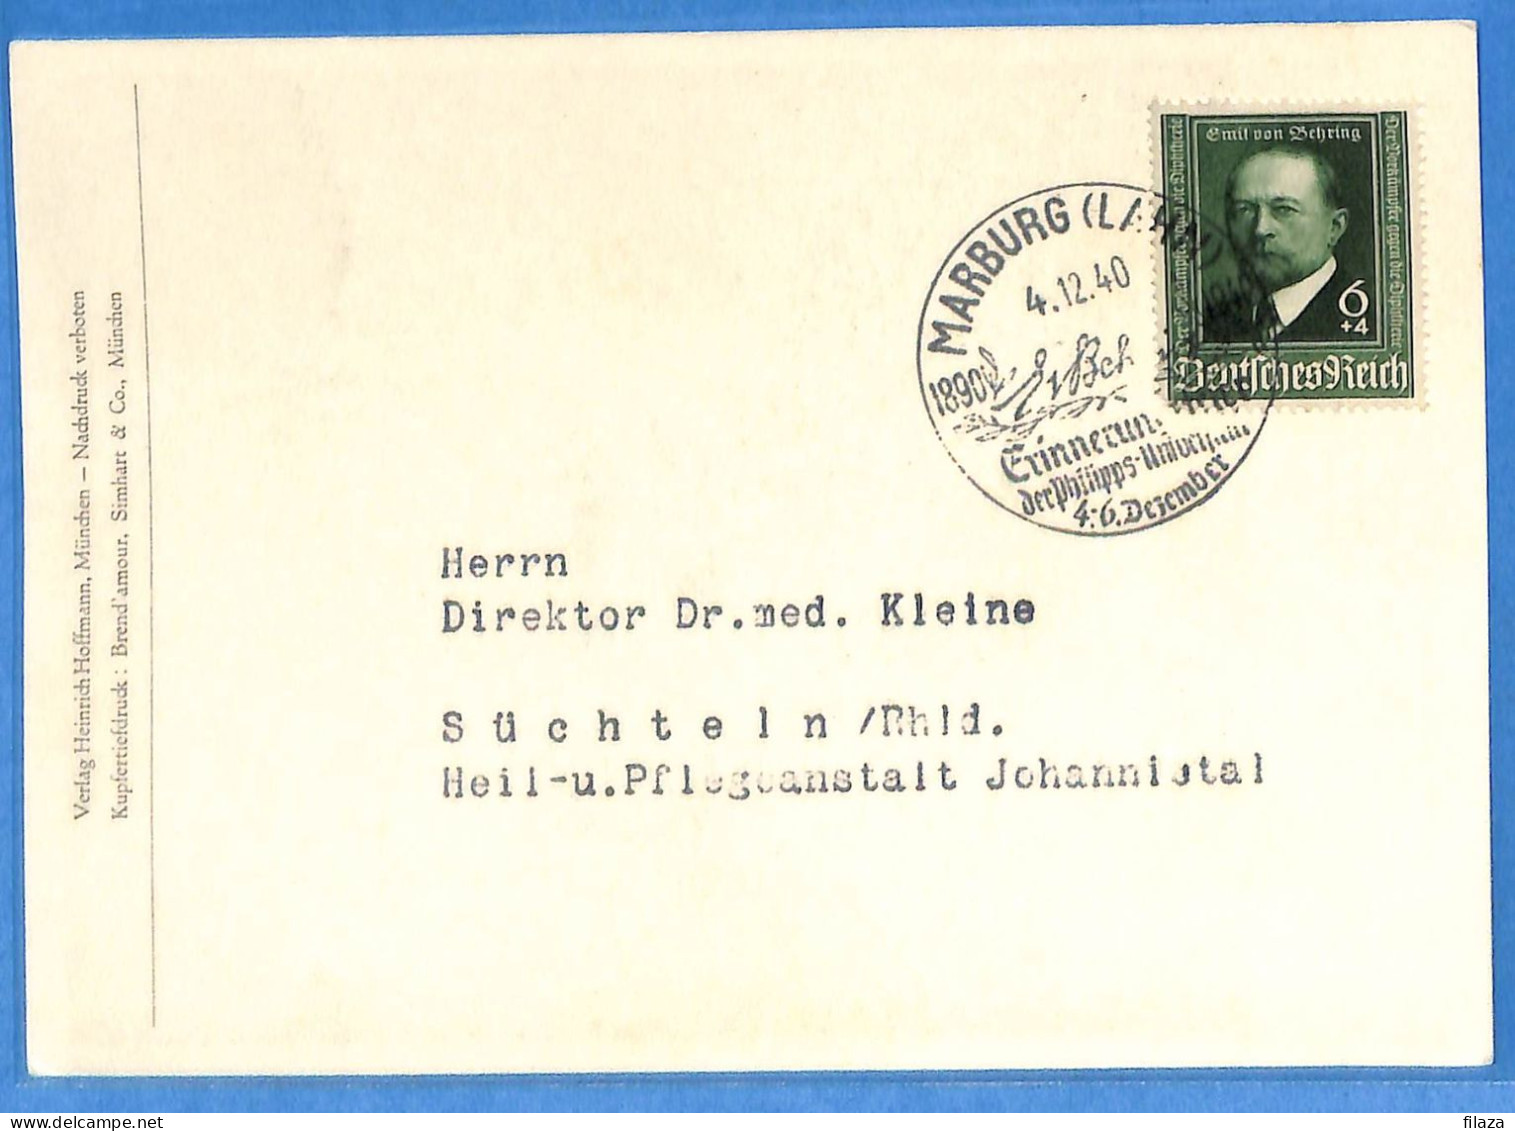 Allemagne Reich 1940 - Carte Postale De Marburg - G33195 - Storia Postale